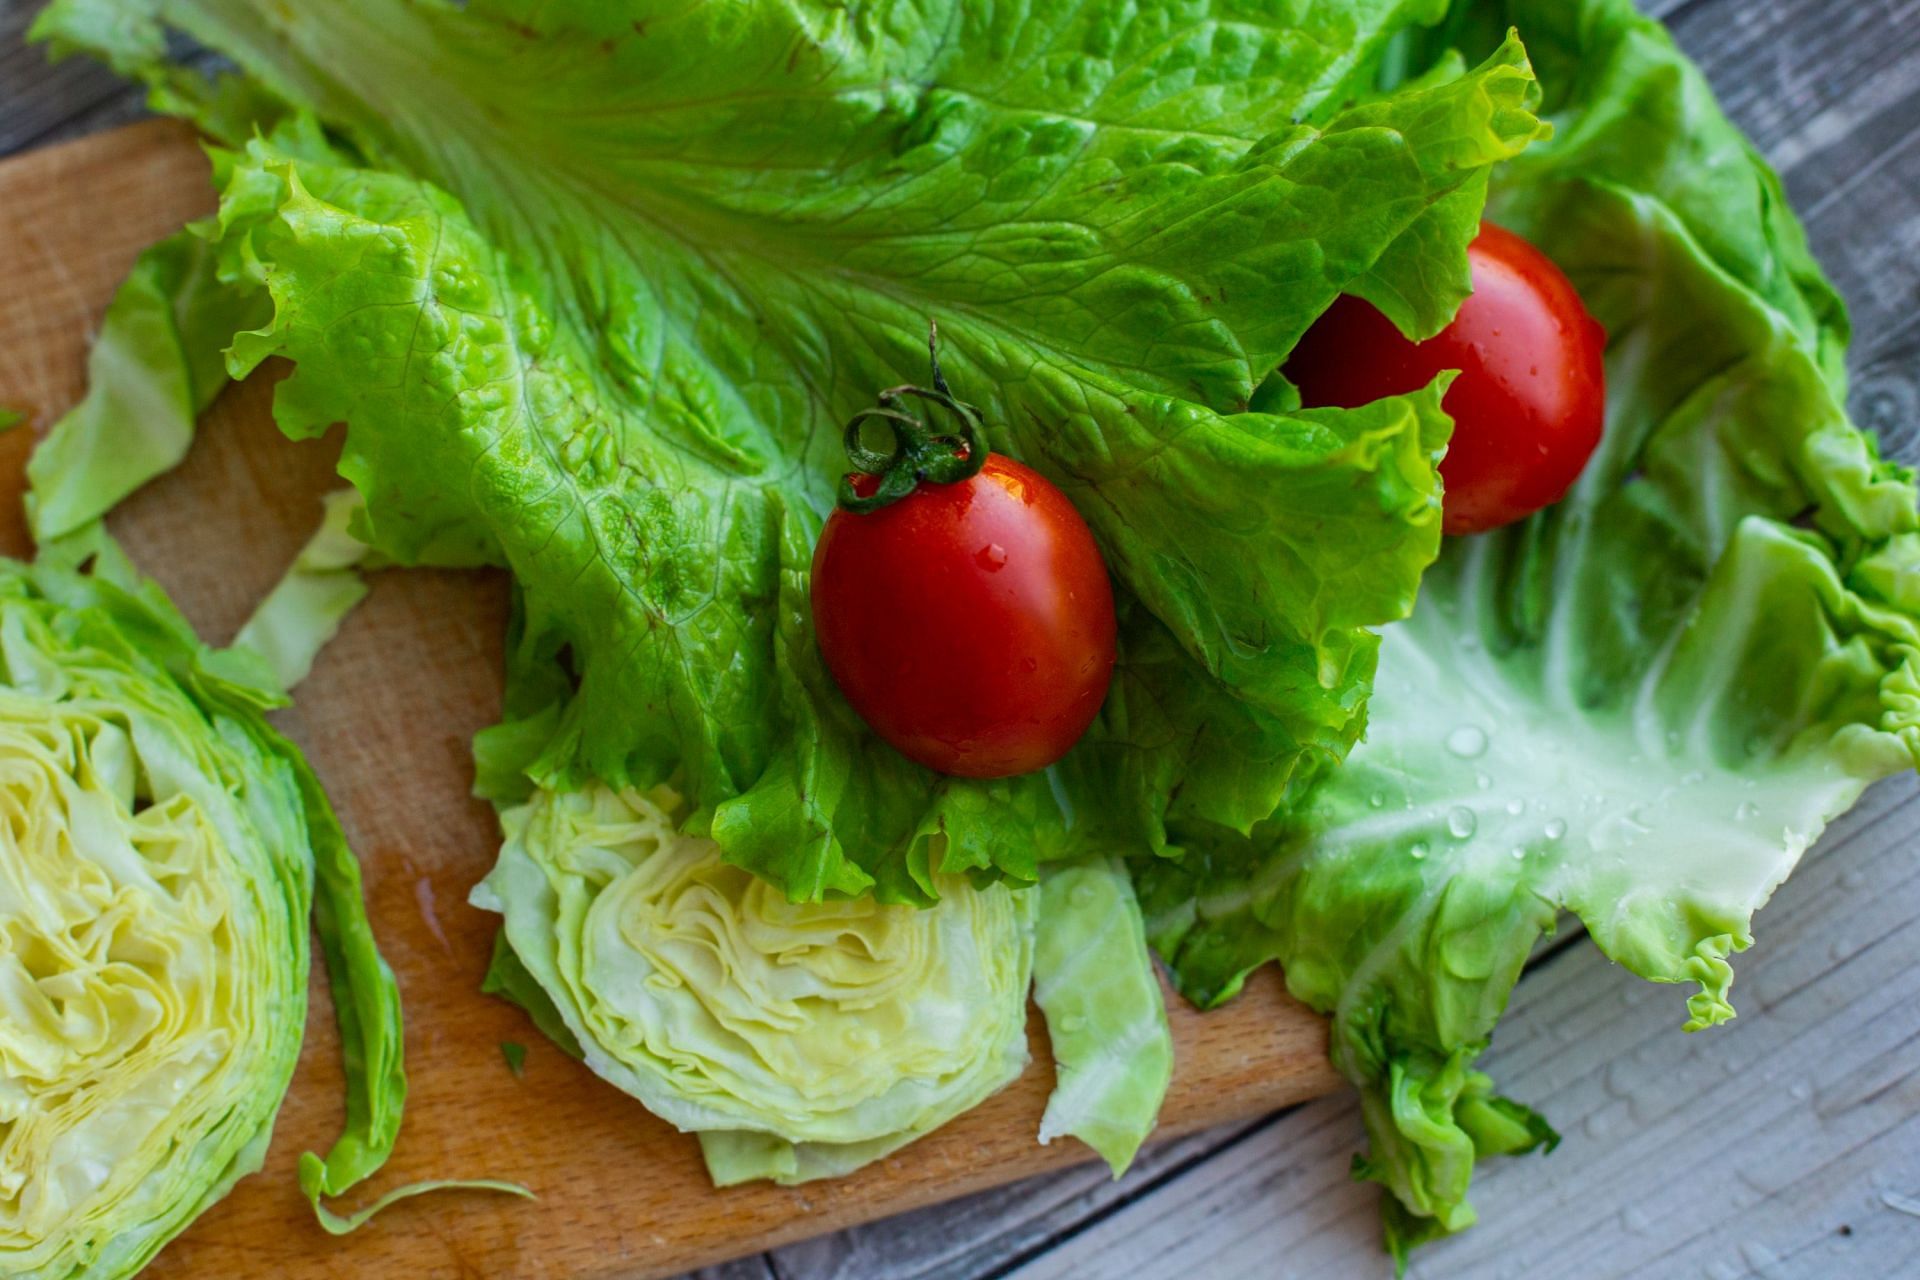 Lettuce (Photo via Pexels/Victoria Emerson)